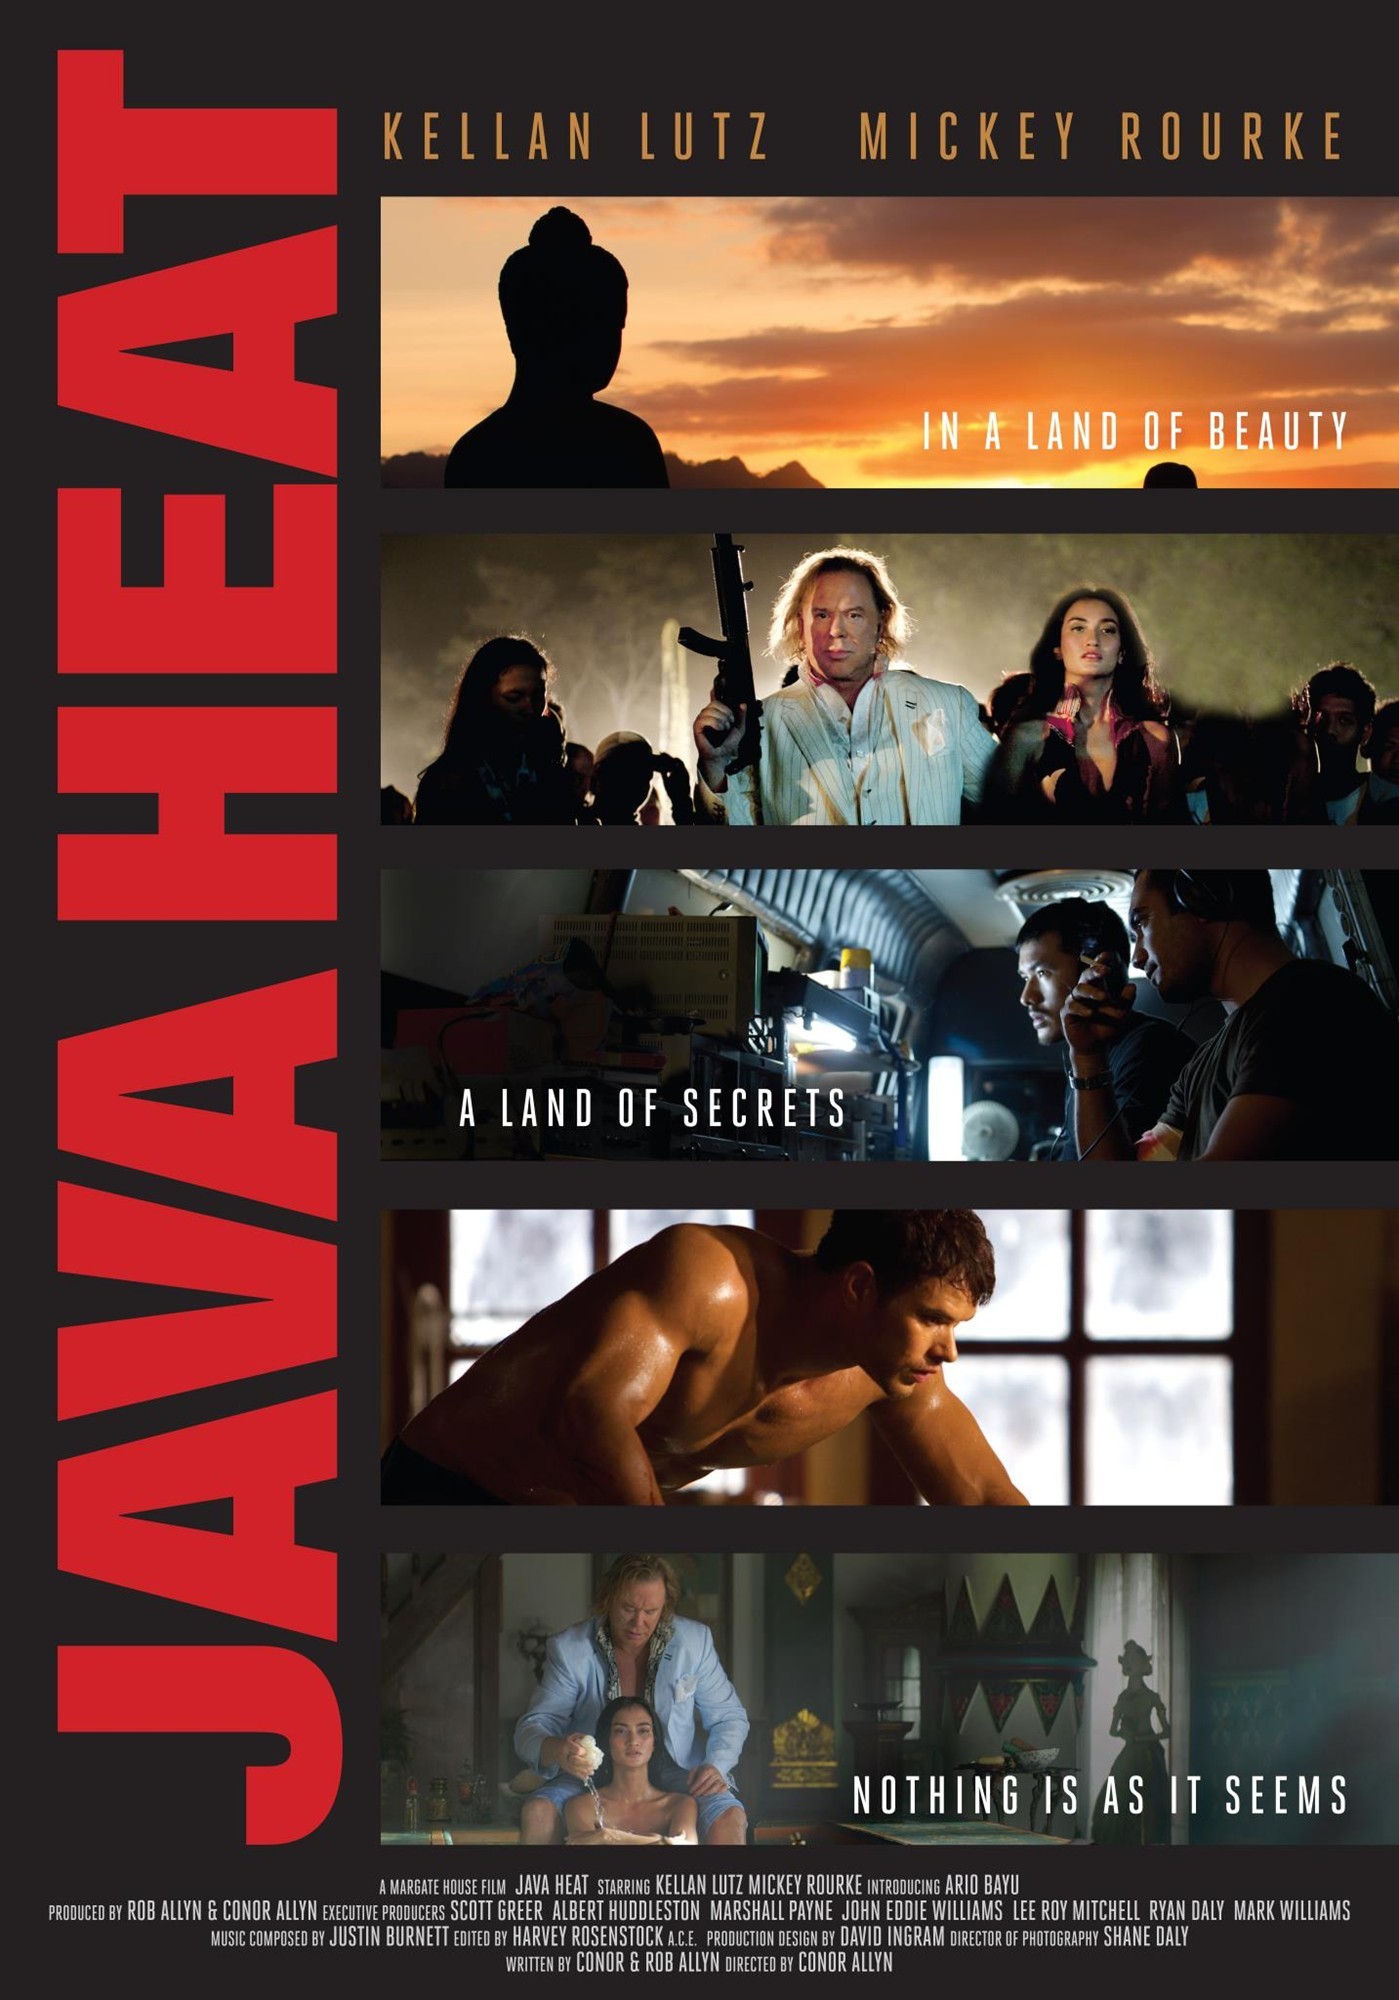 Poster of IFC Films' Java Heat (2013)